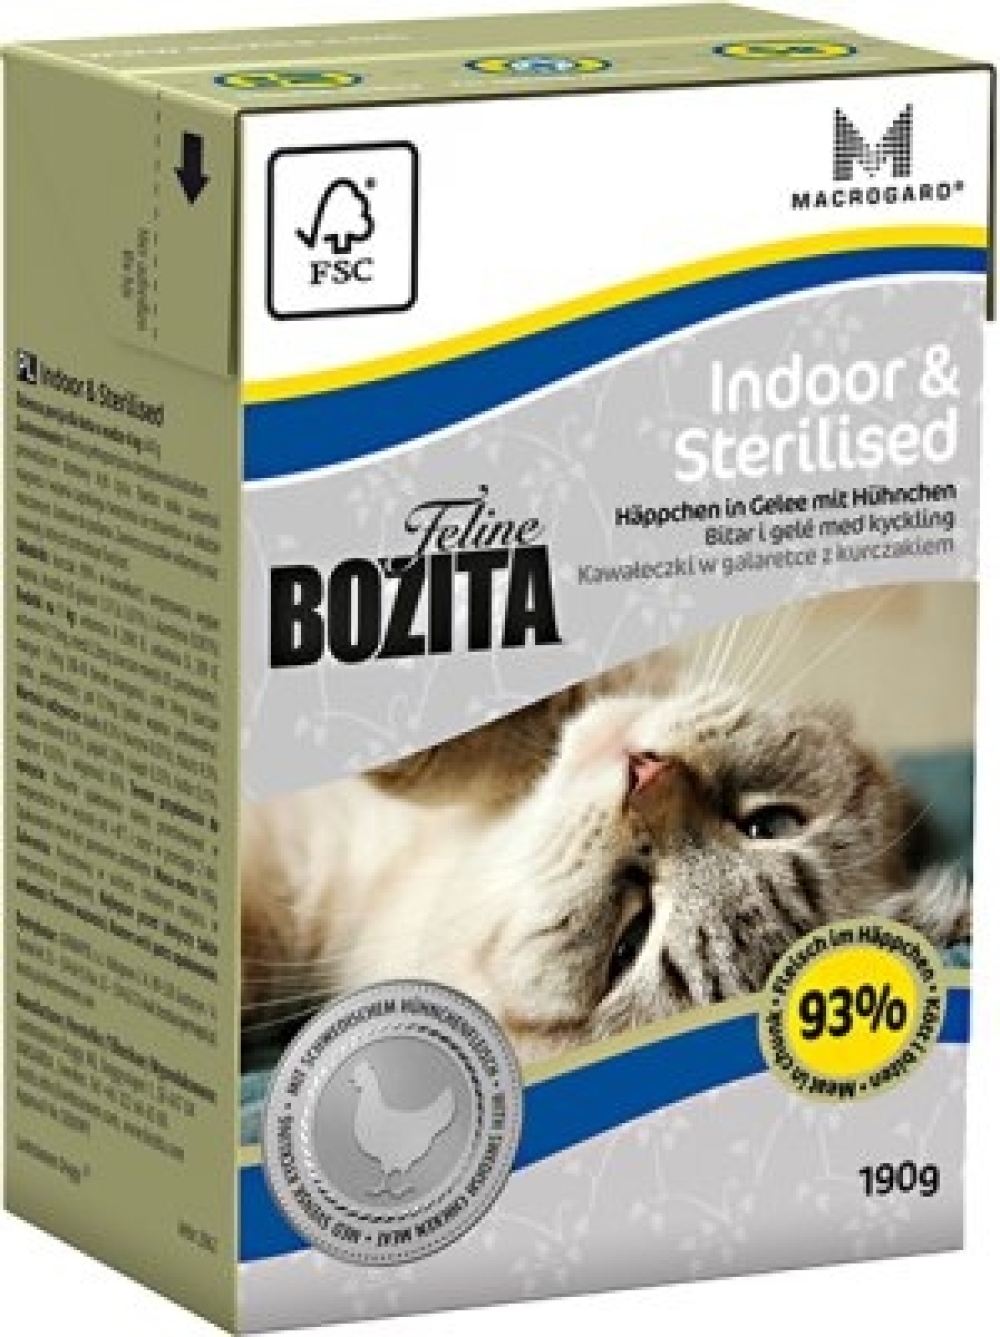 Bozita Feline Indoor & Sterili, 190g